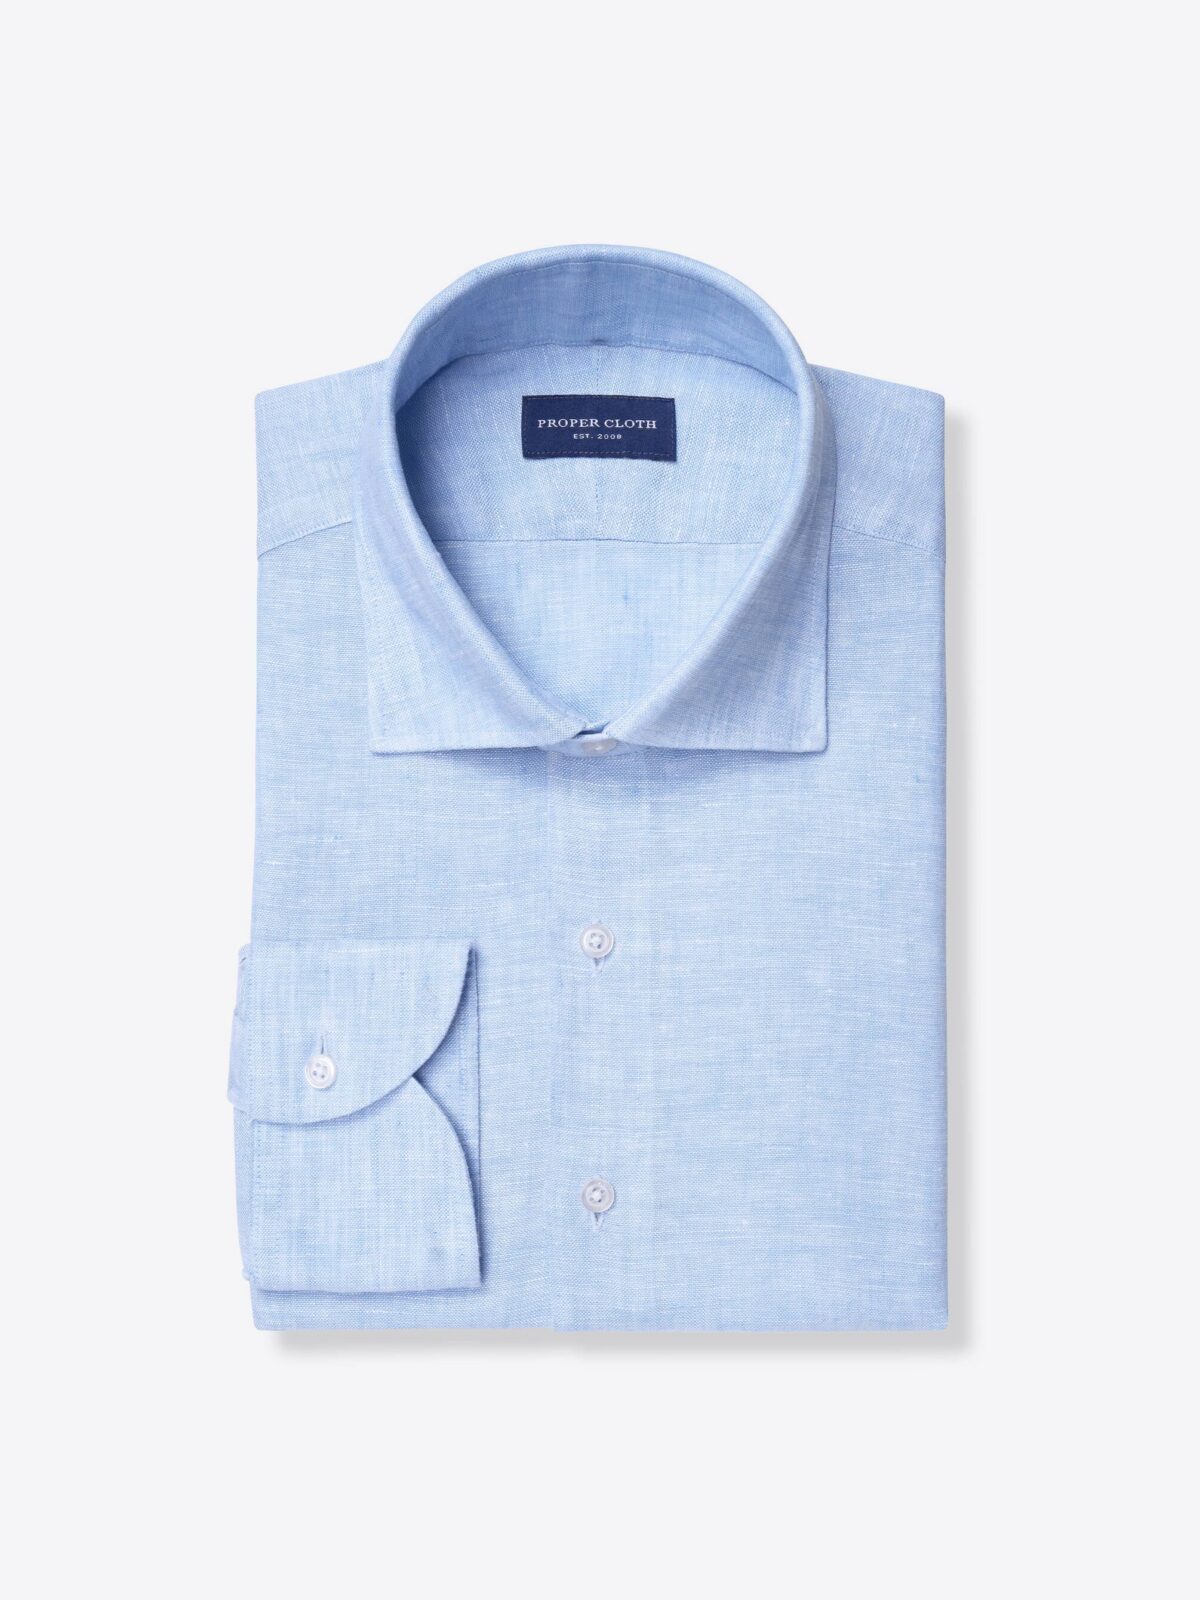 Light Blue Washed Linen Shirt by Proper Cloth